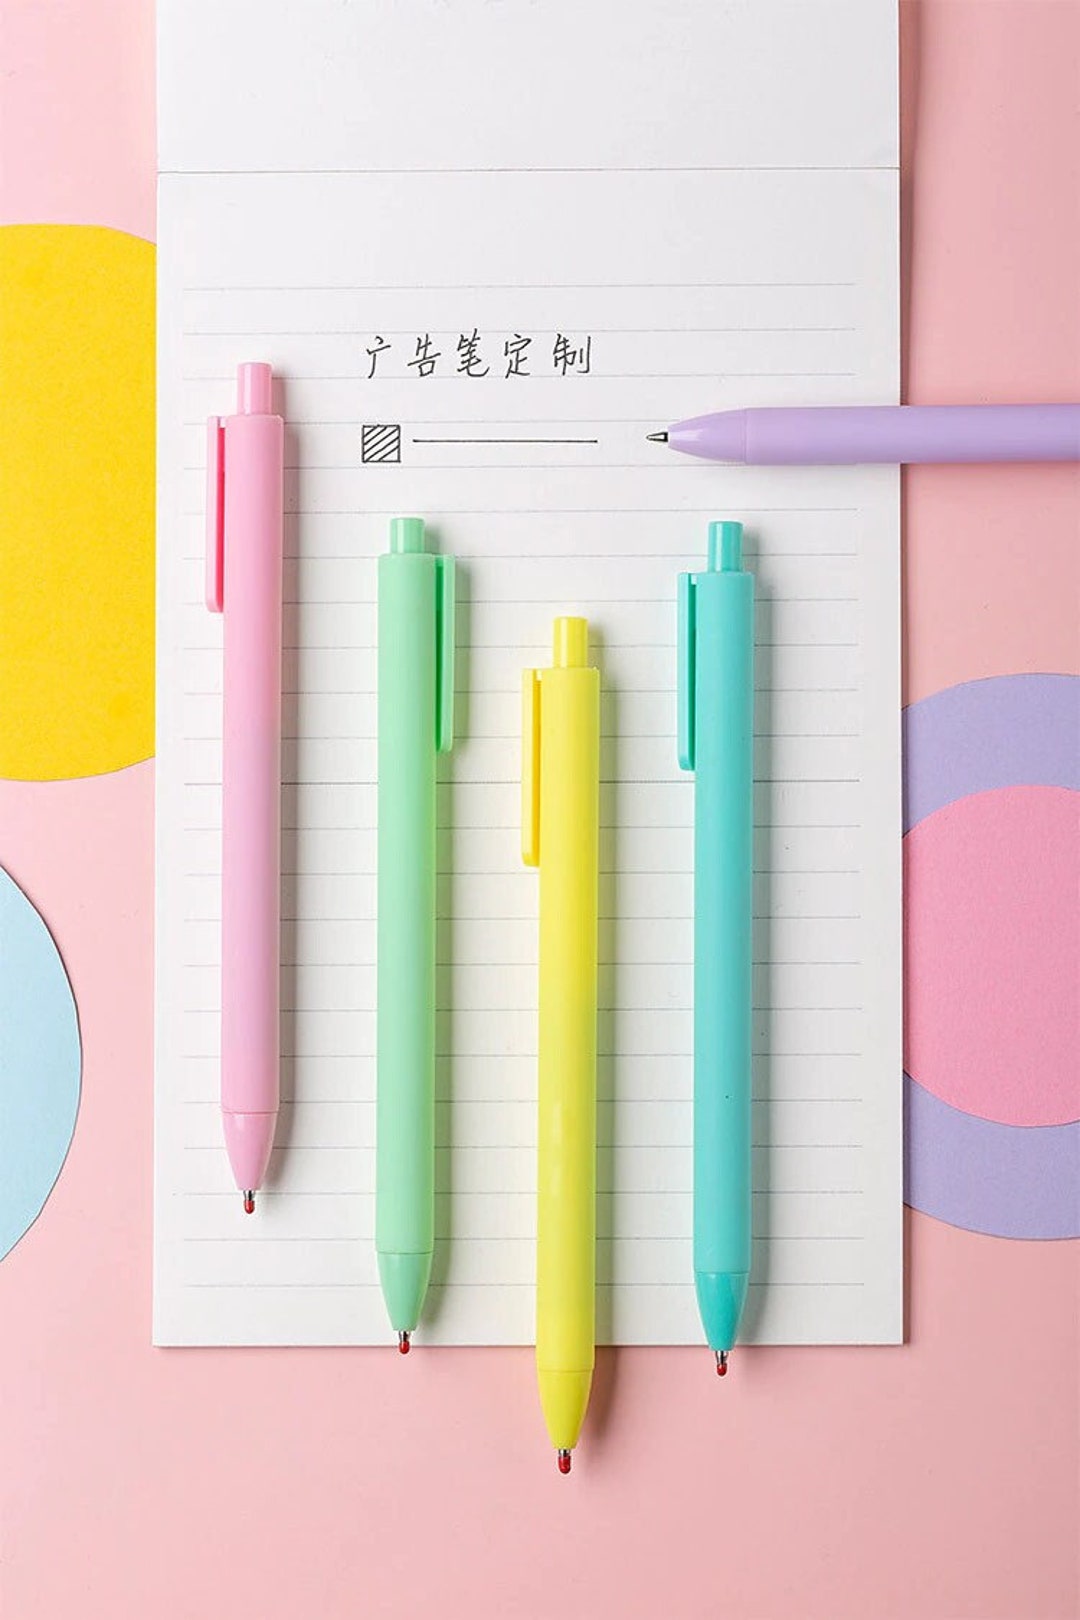 Set of Five Multi-colored Pens Stock Vector - Illustration of multicolored,  clamp: 115028545